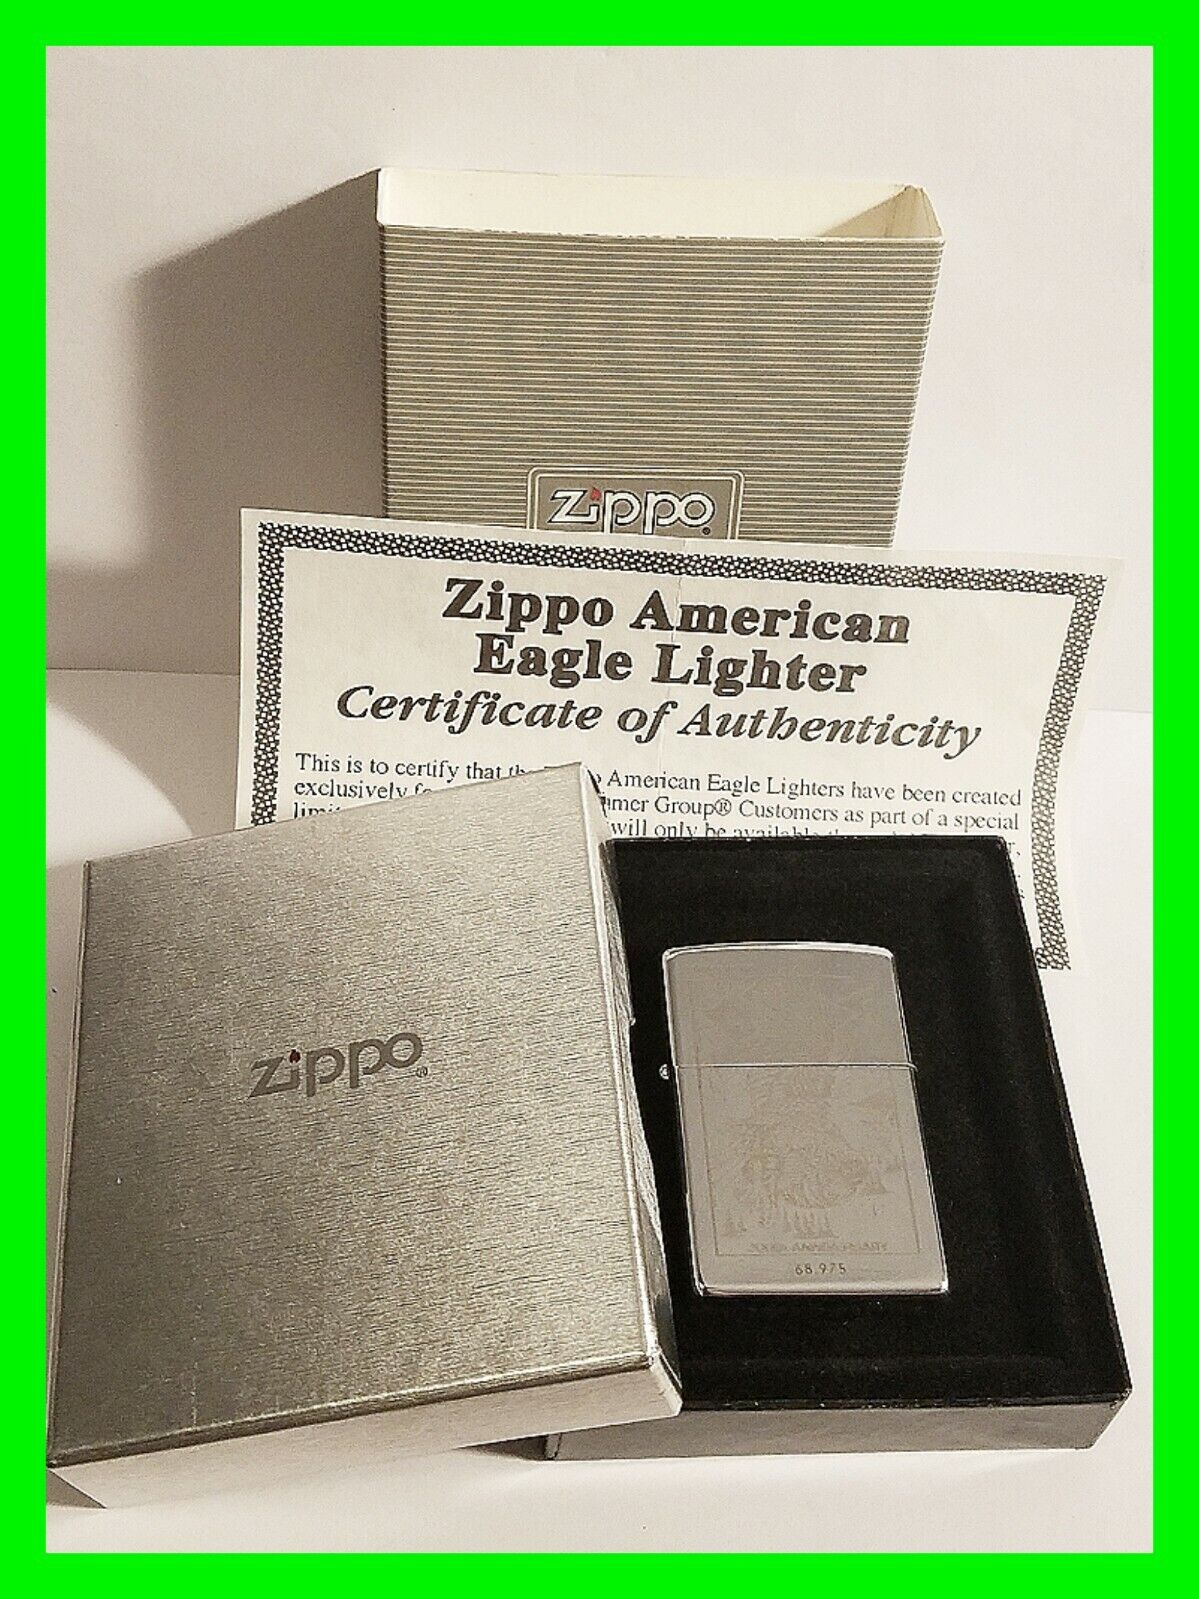 UNFIRED Vintage American Eagle 200th Anniversary Zippo Lighter w/ Original Box